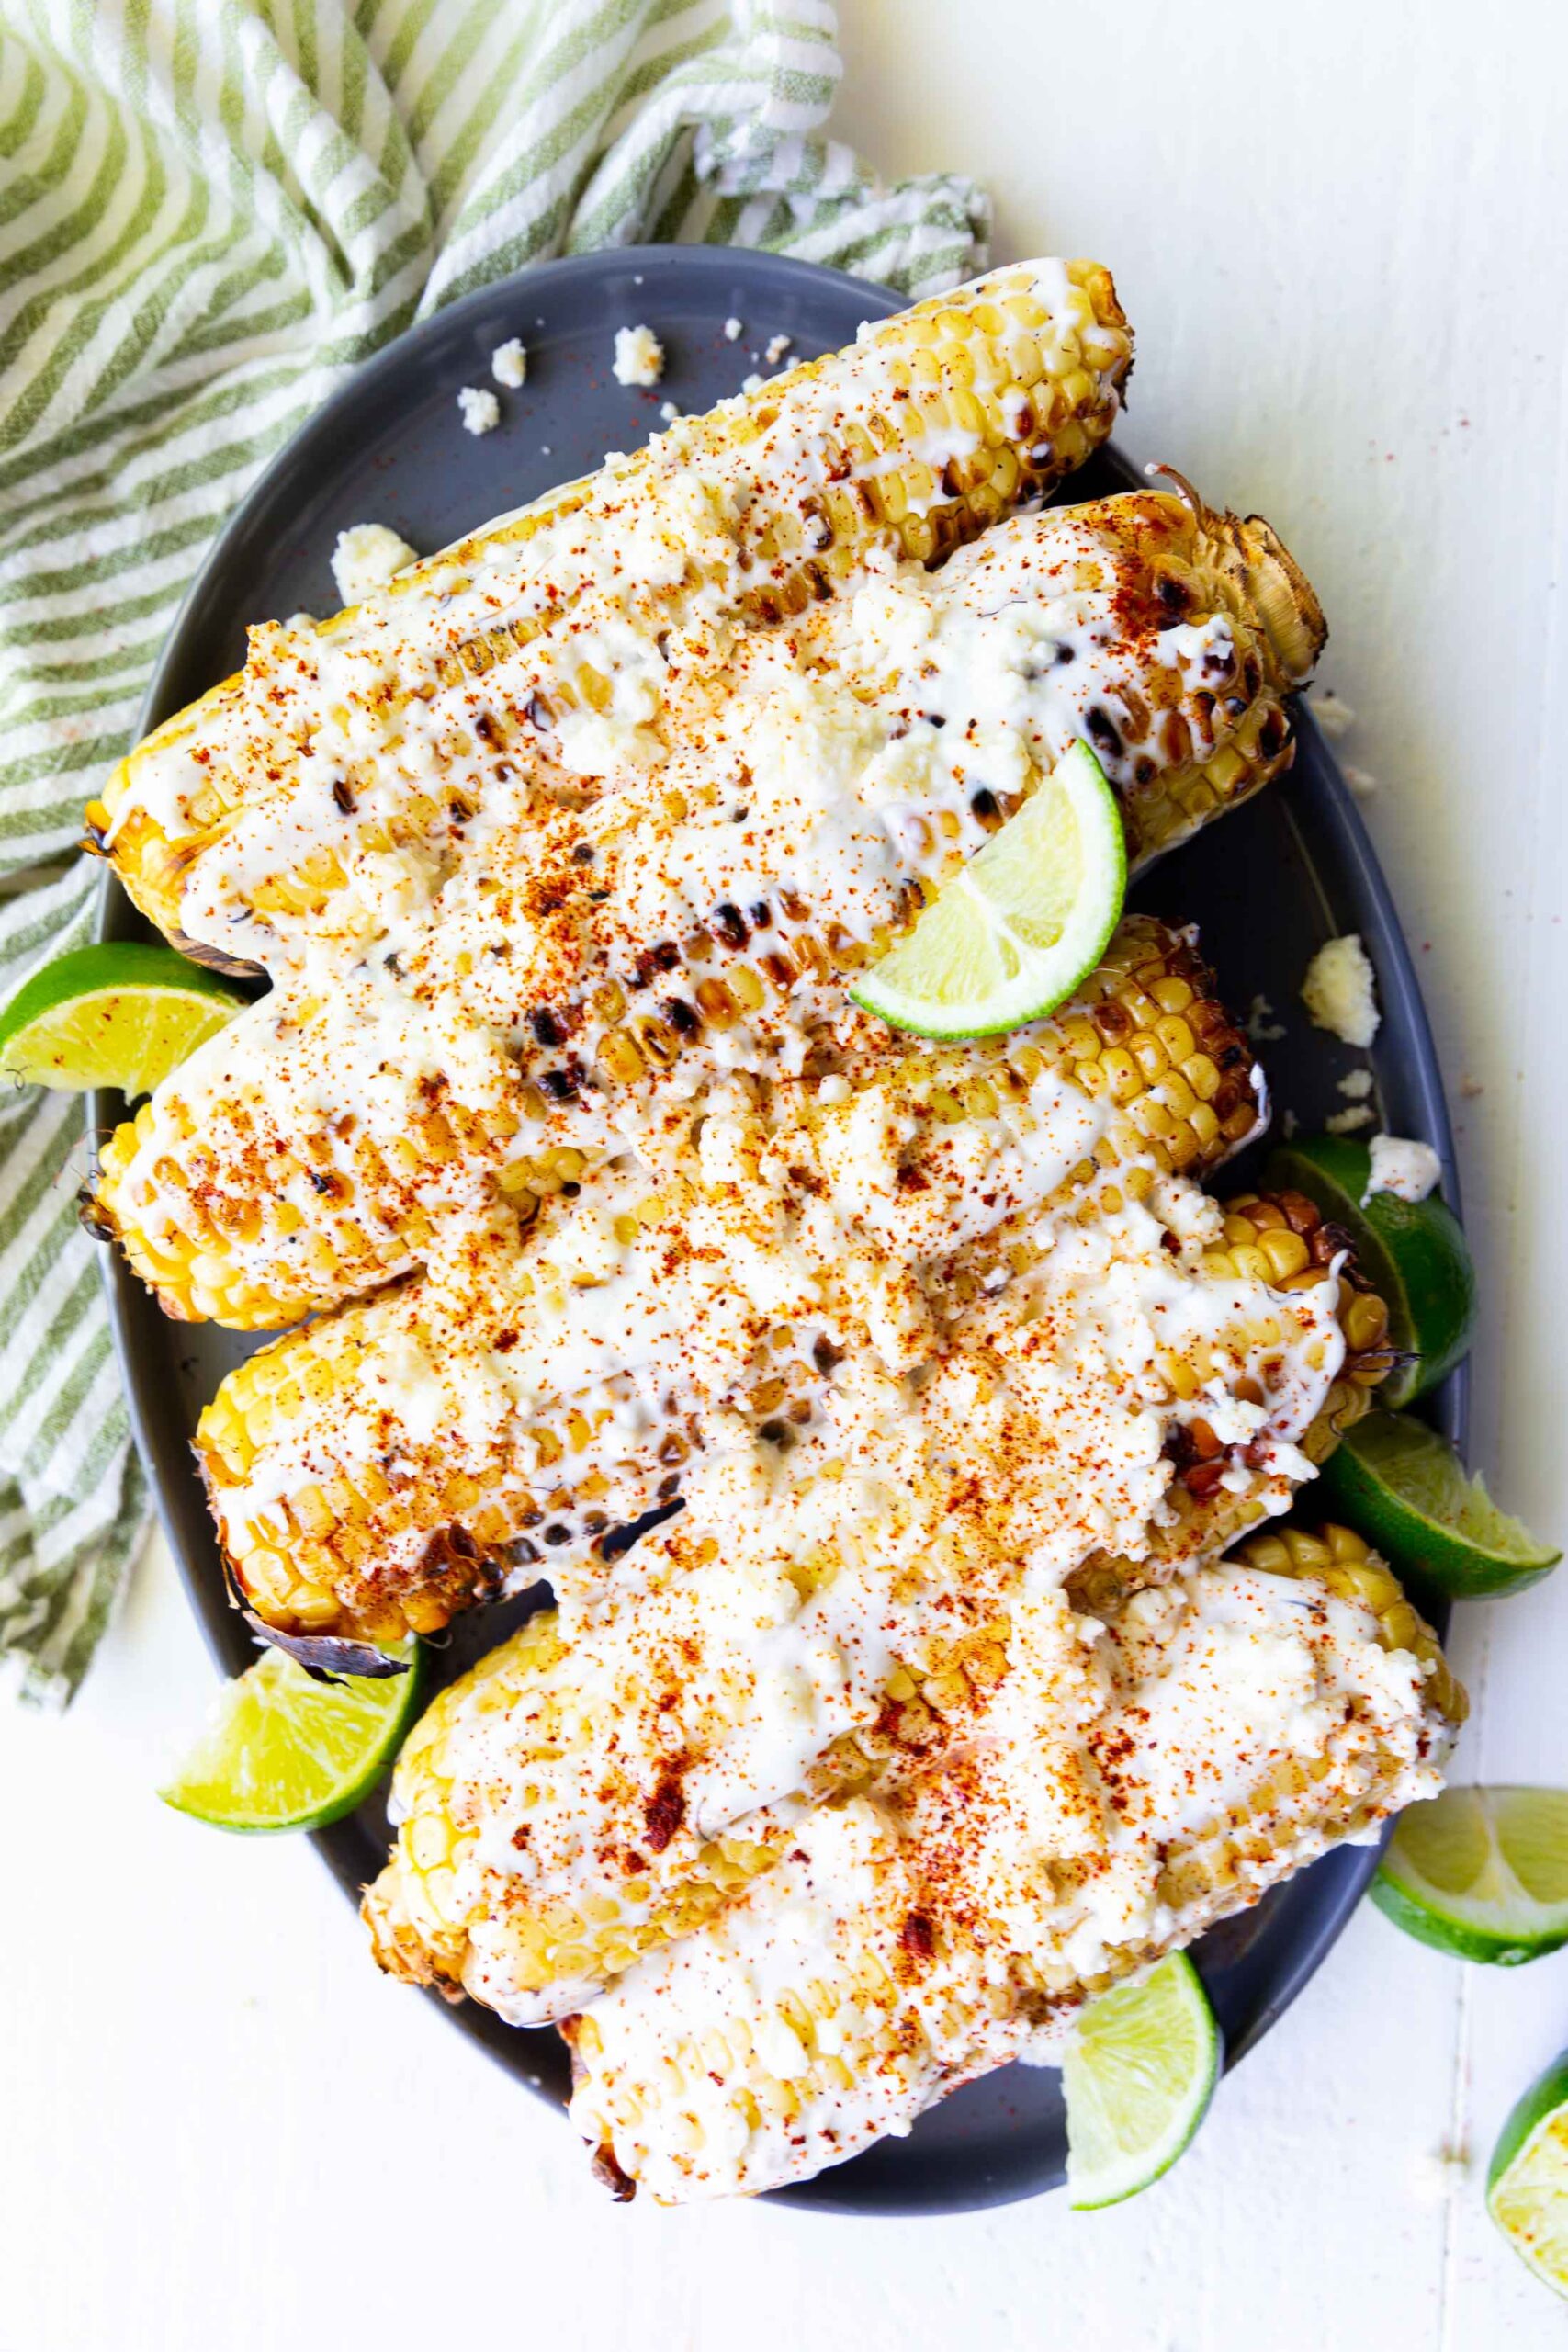 Mexican Corn on the Cob (Elote) Recipe